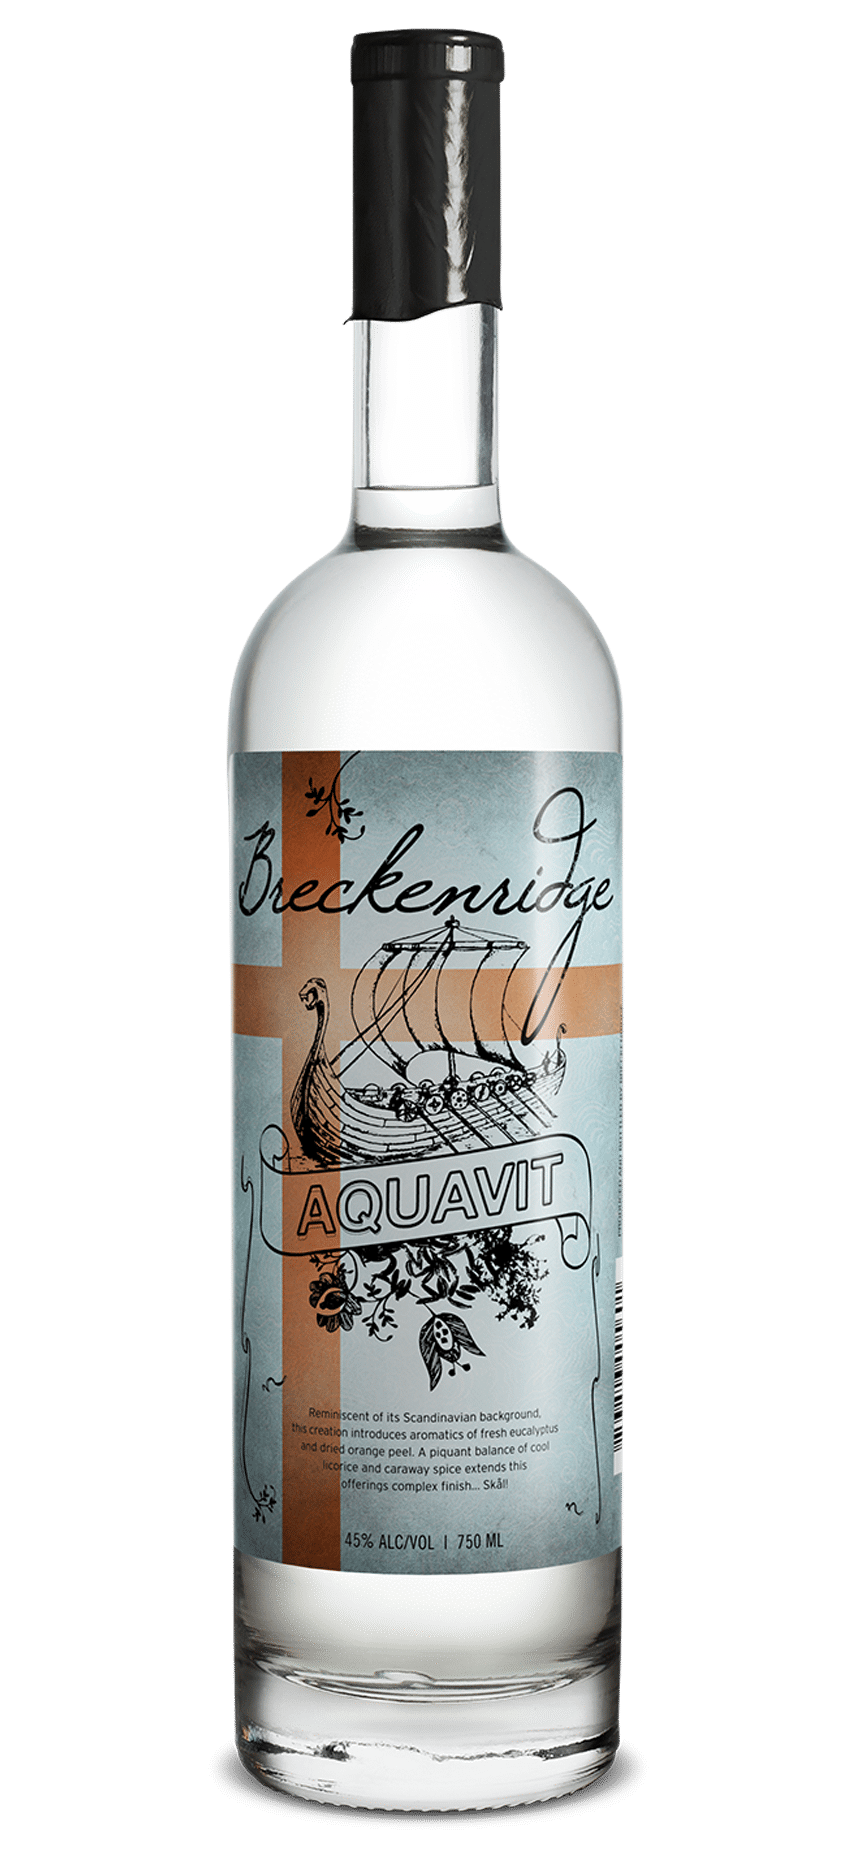 Breckenridge Aquavit bottle